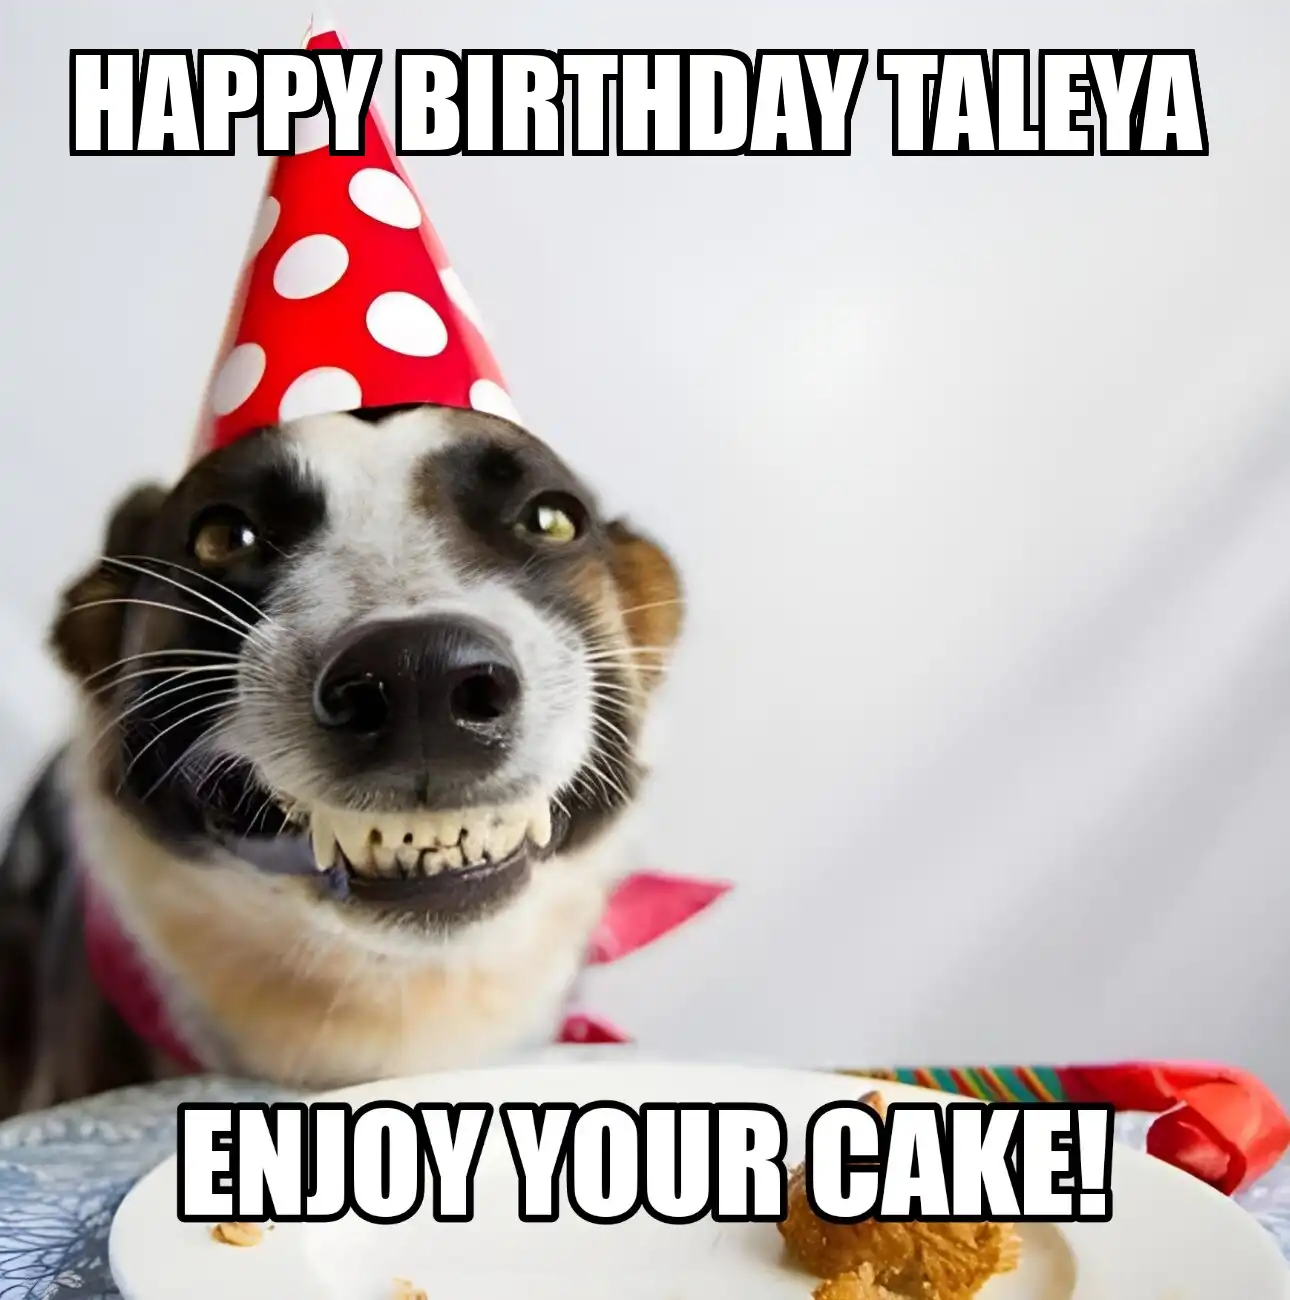 Happy Birthday Taleya Enjoy Your Cake Dog Meme